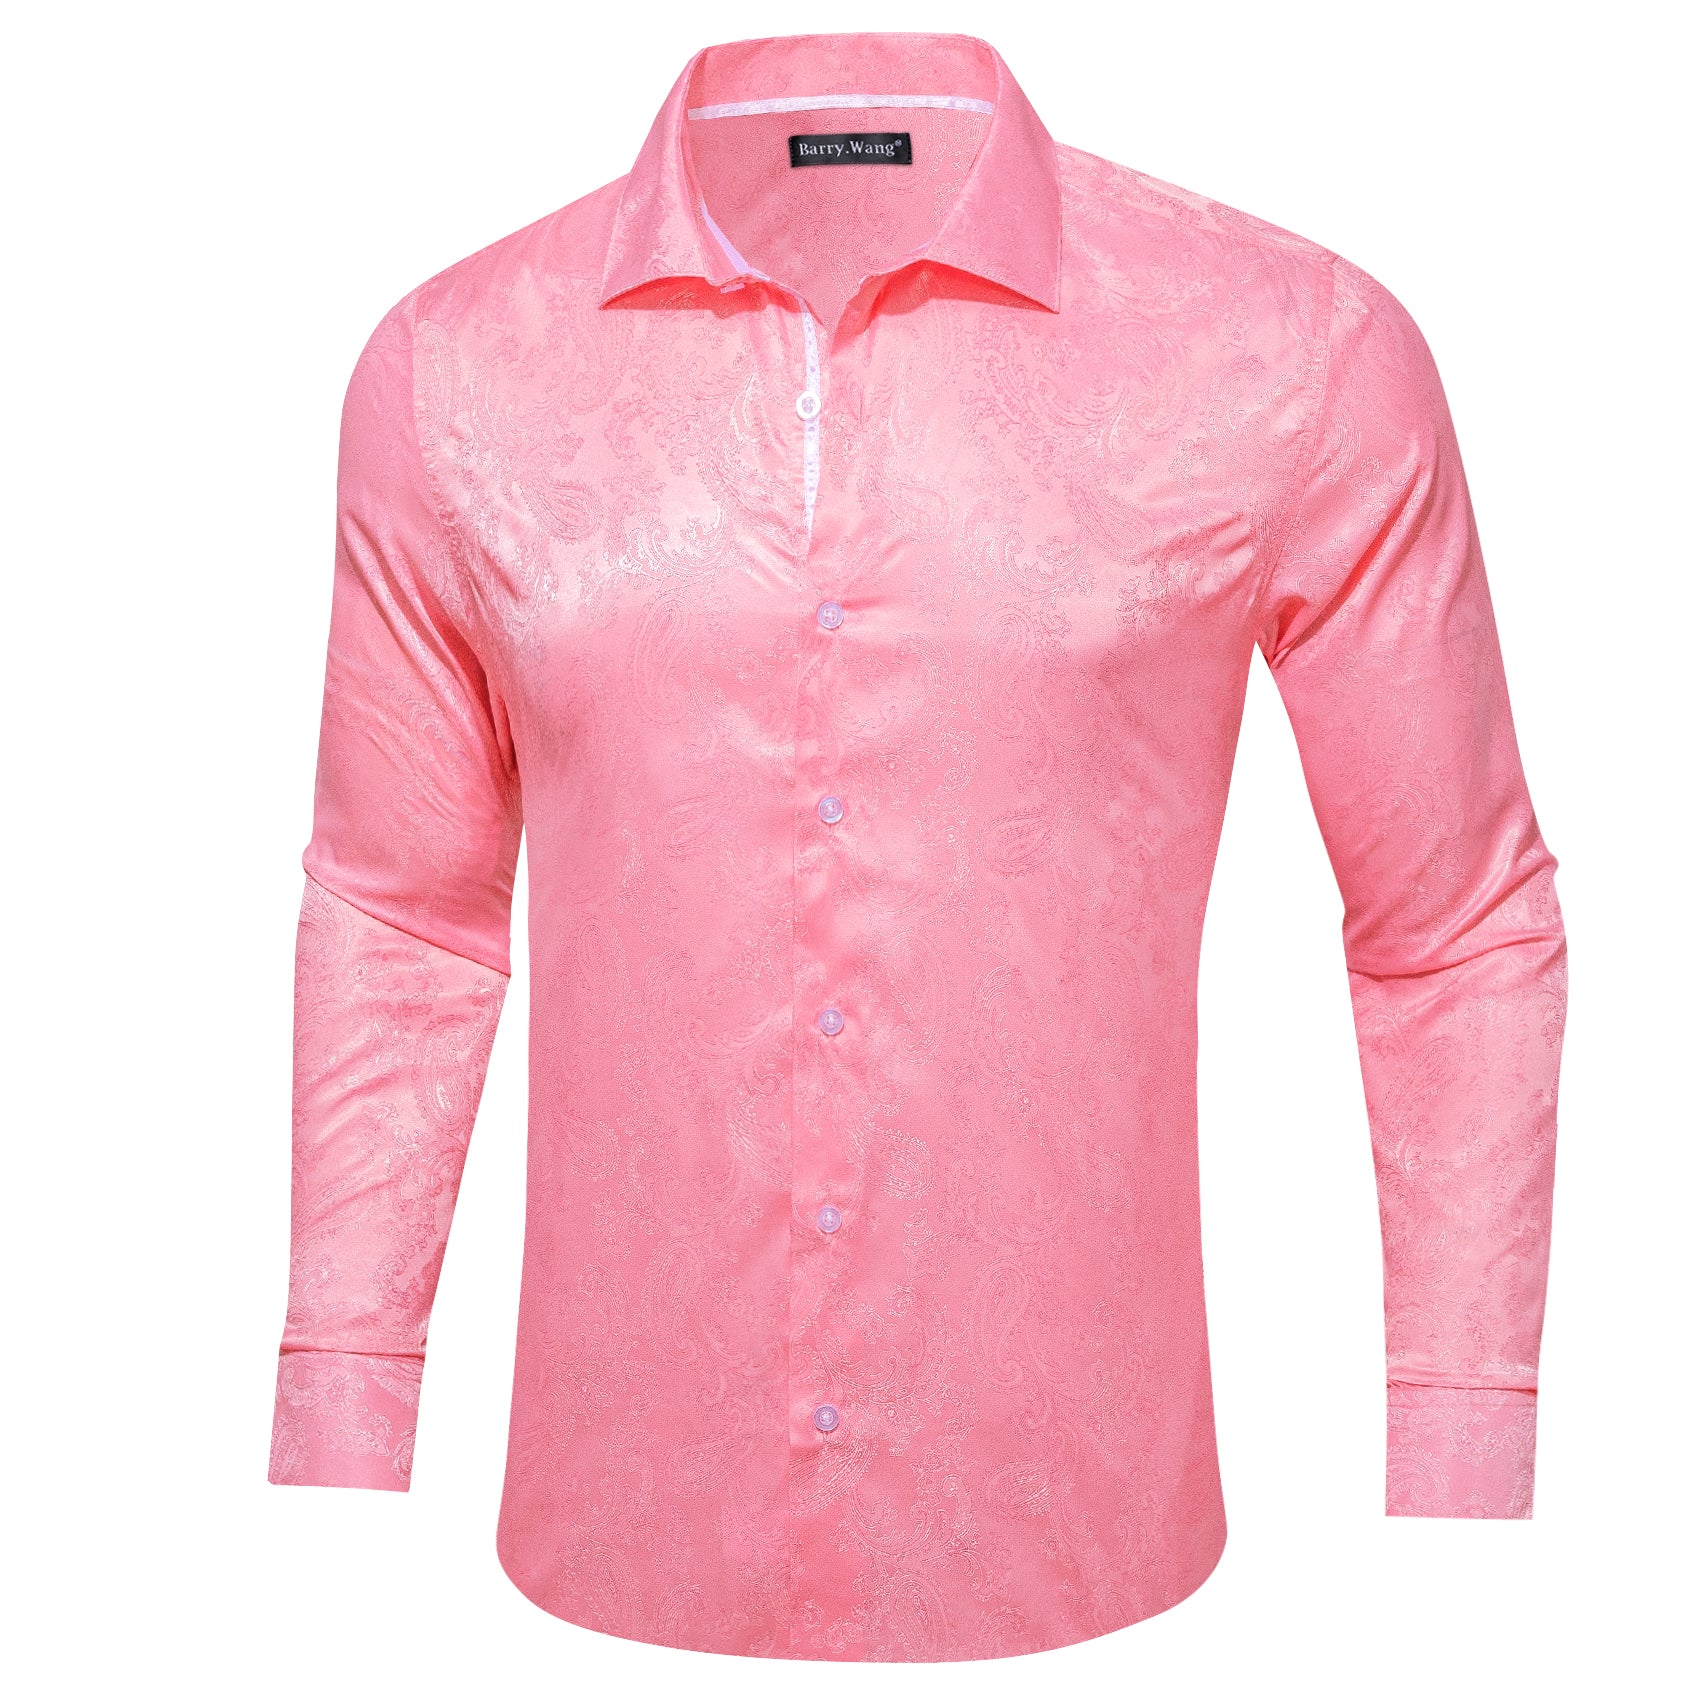 Barry.wang Button Down Shirt Men's Pink Paisley Silk Long Sleeve Shirt